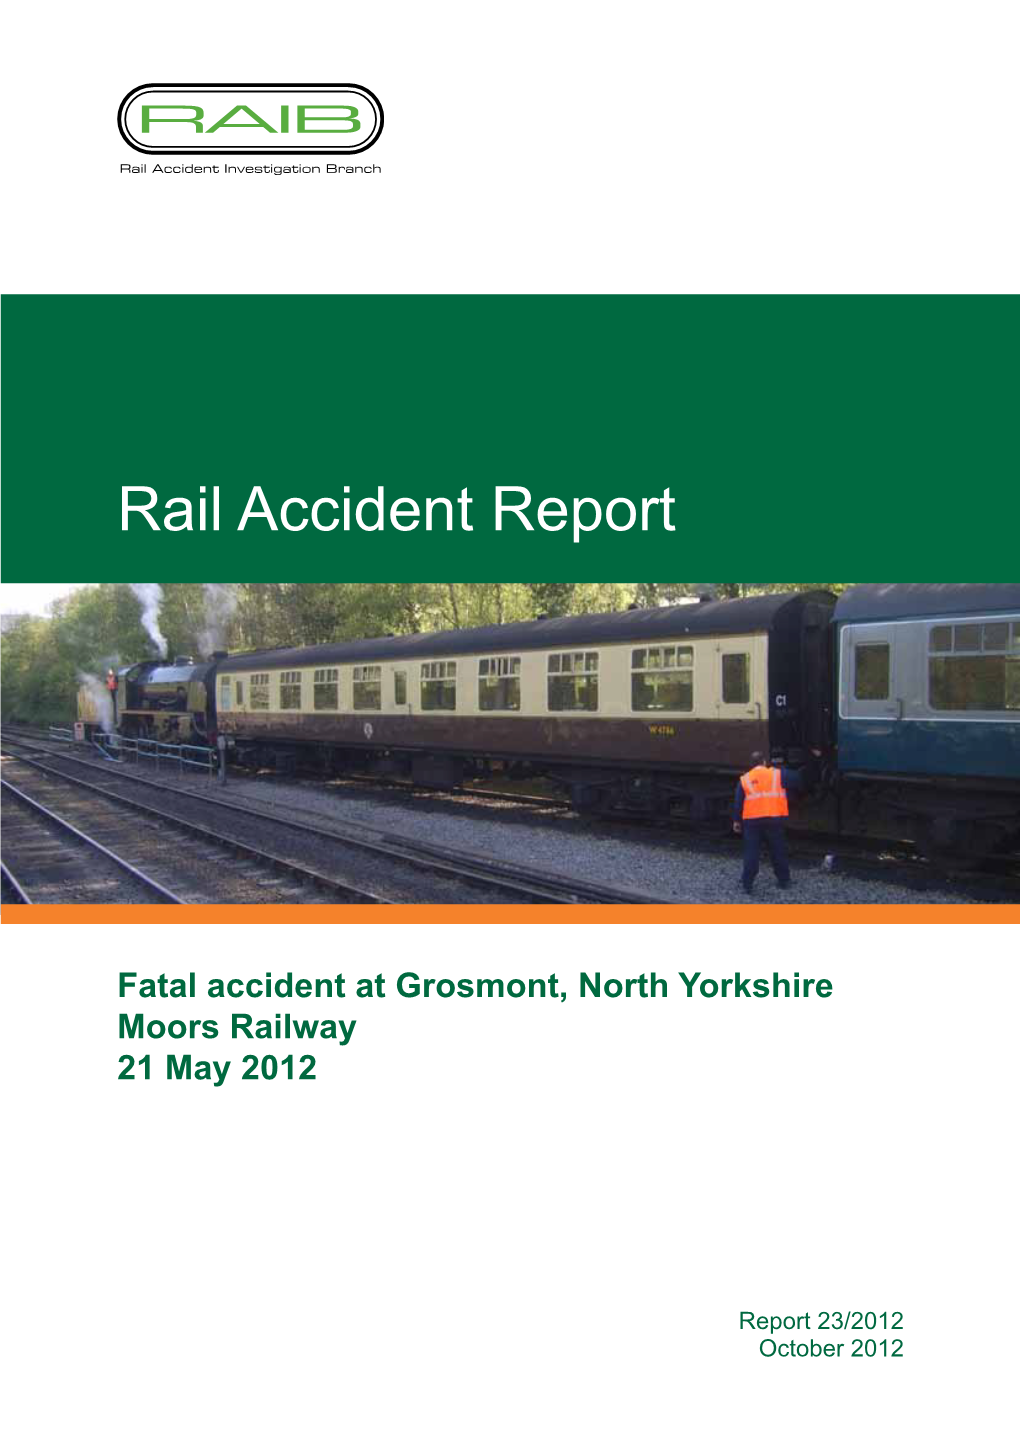 Grosmont, North Yorkshire Moors Railway 21 May 2012